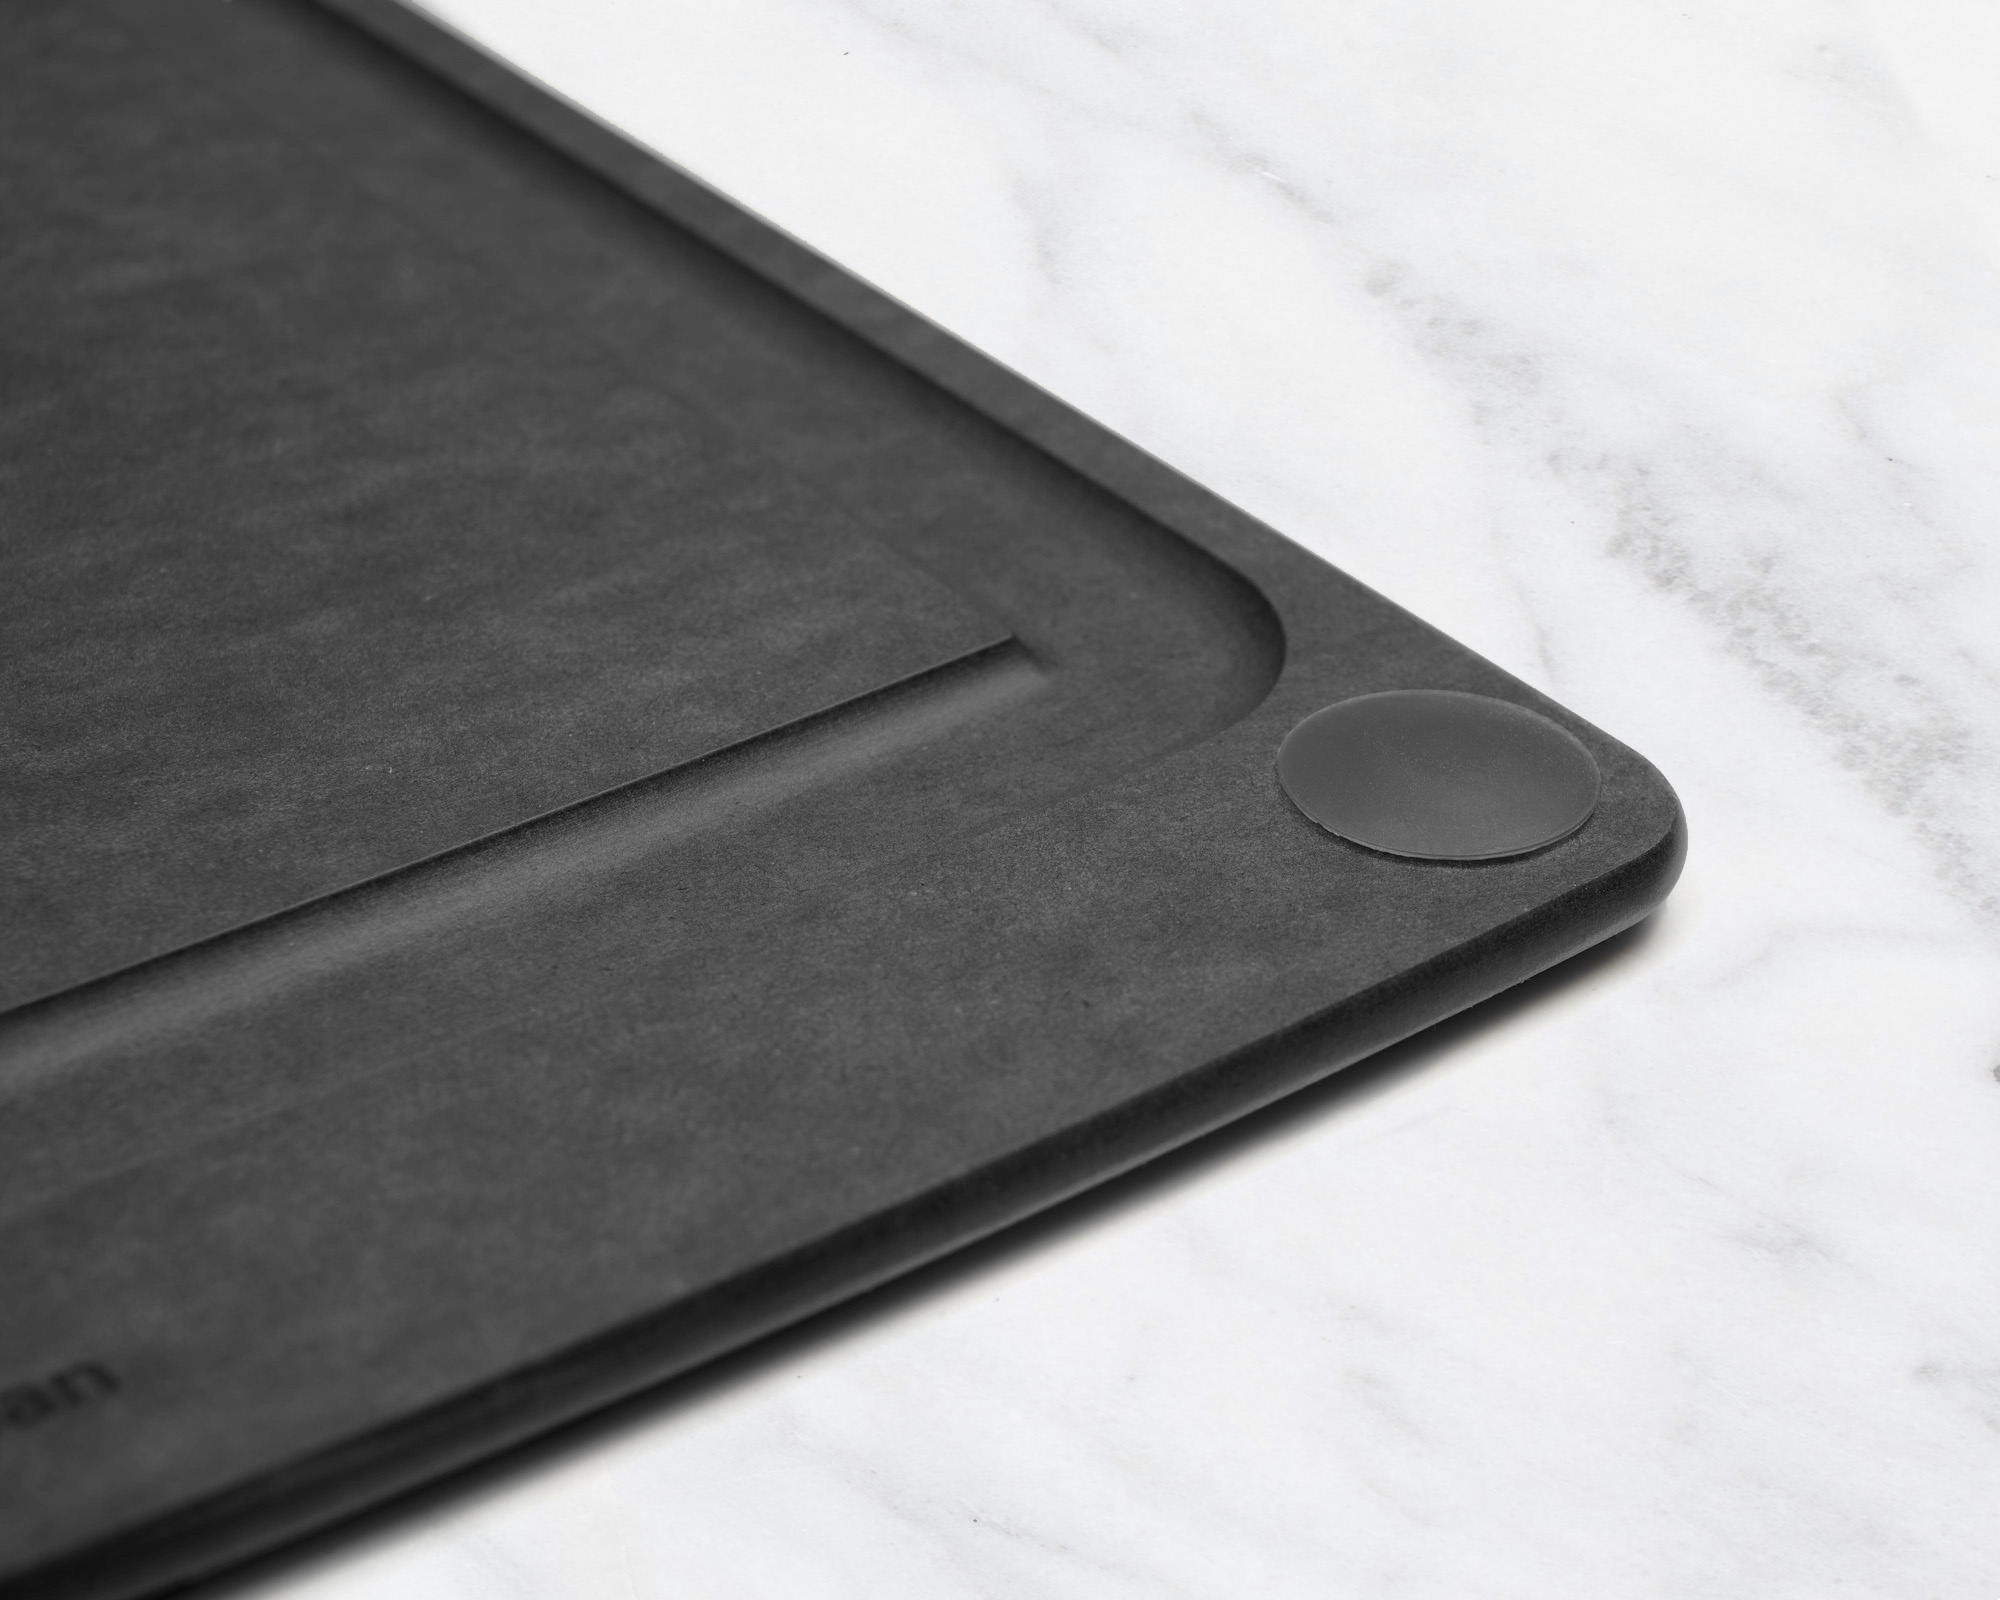 Epicurean Cutting Surfaces Cutting Board 17.5x13 Slate w/Black Buttons